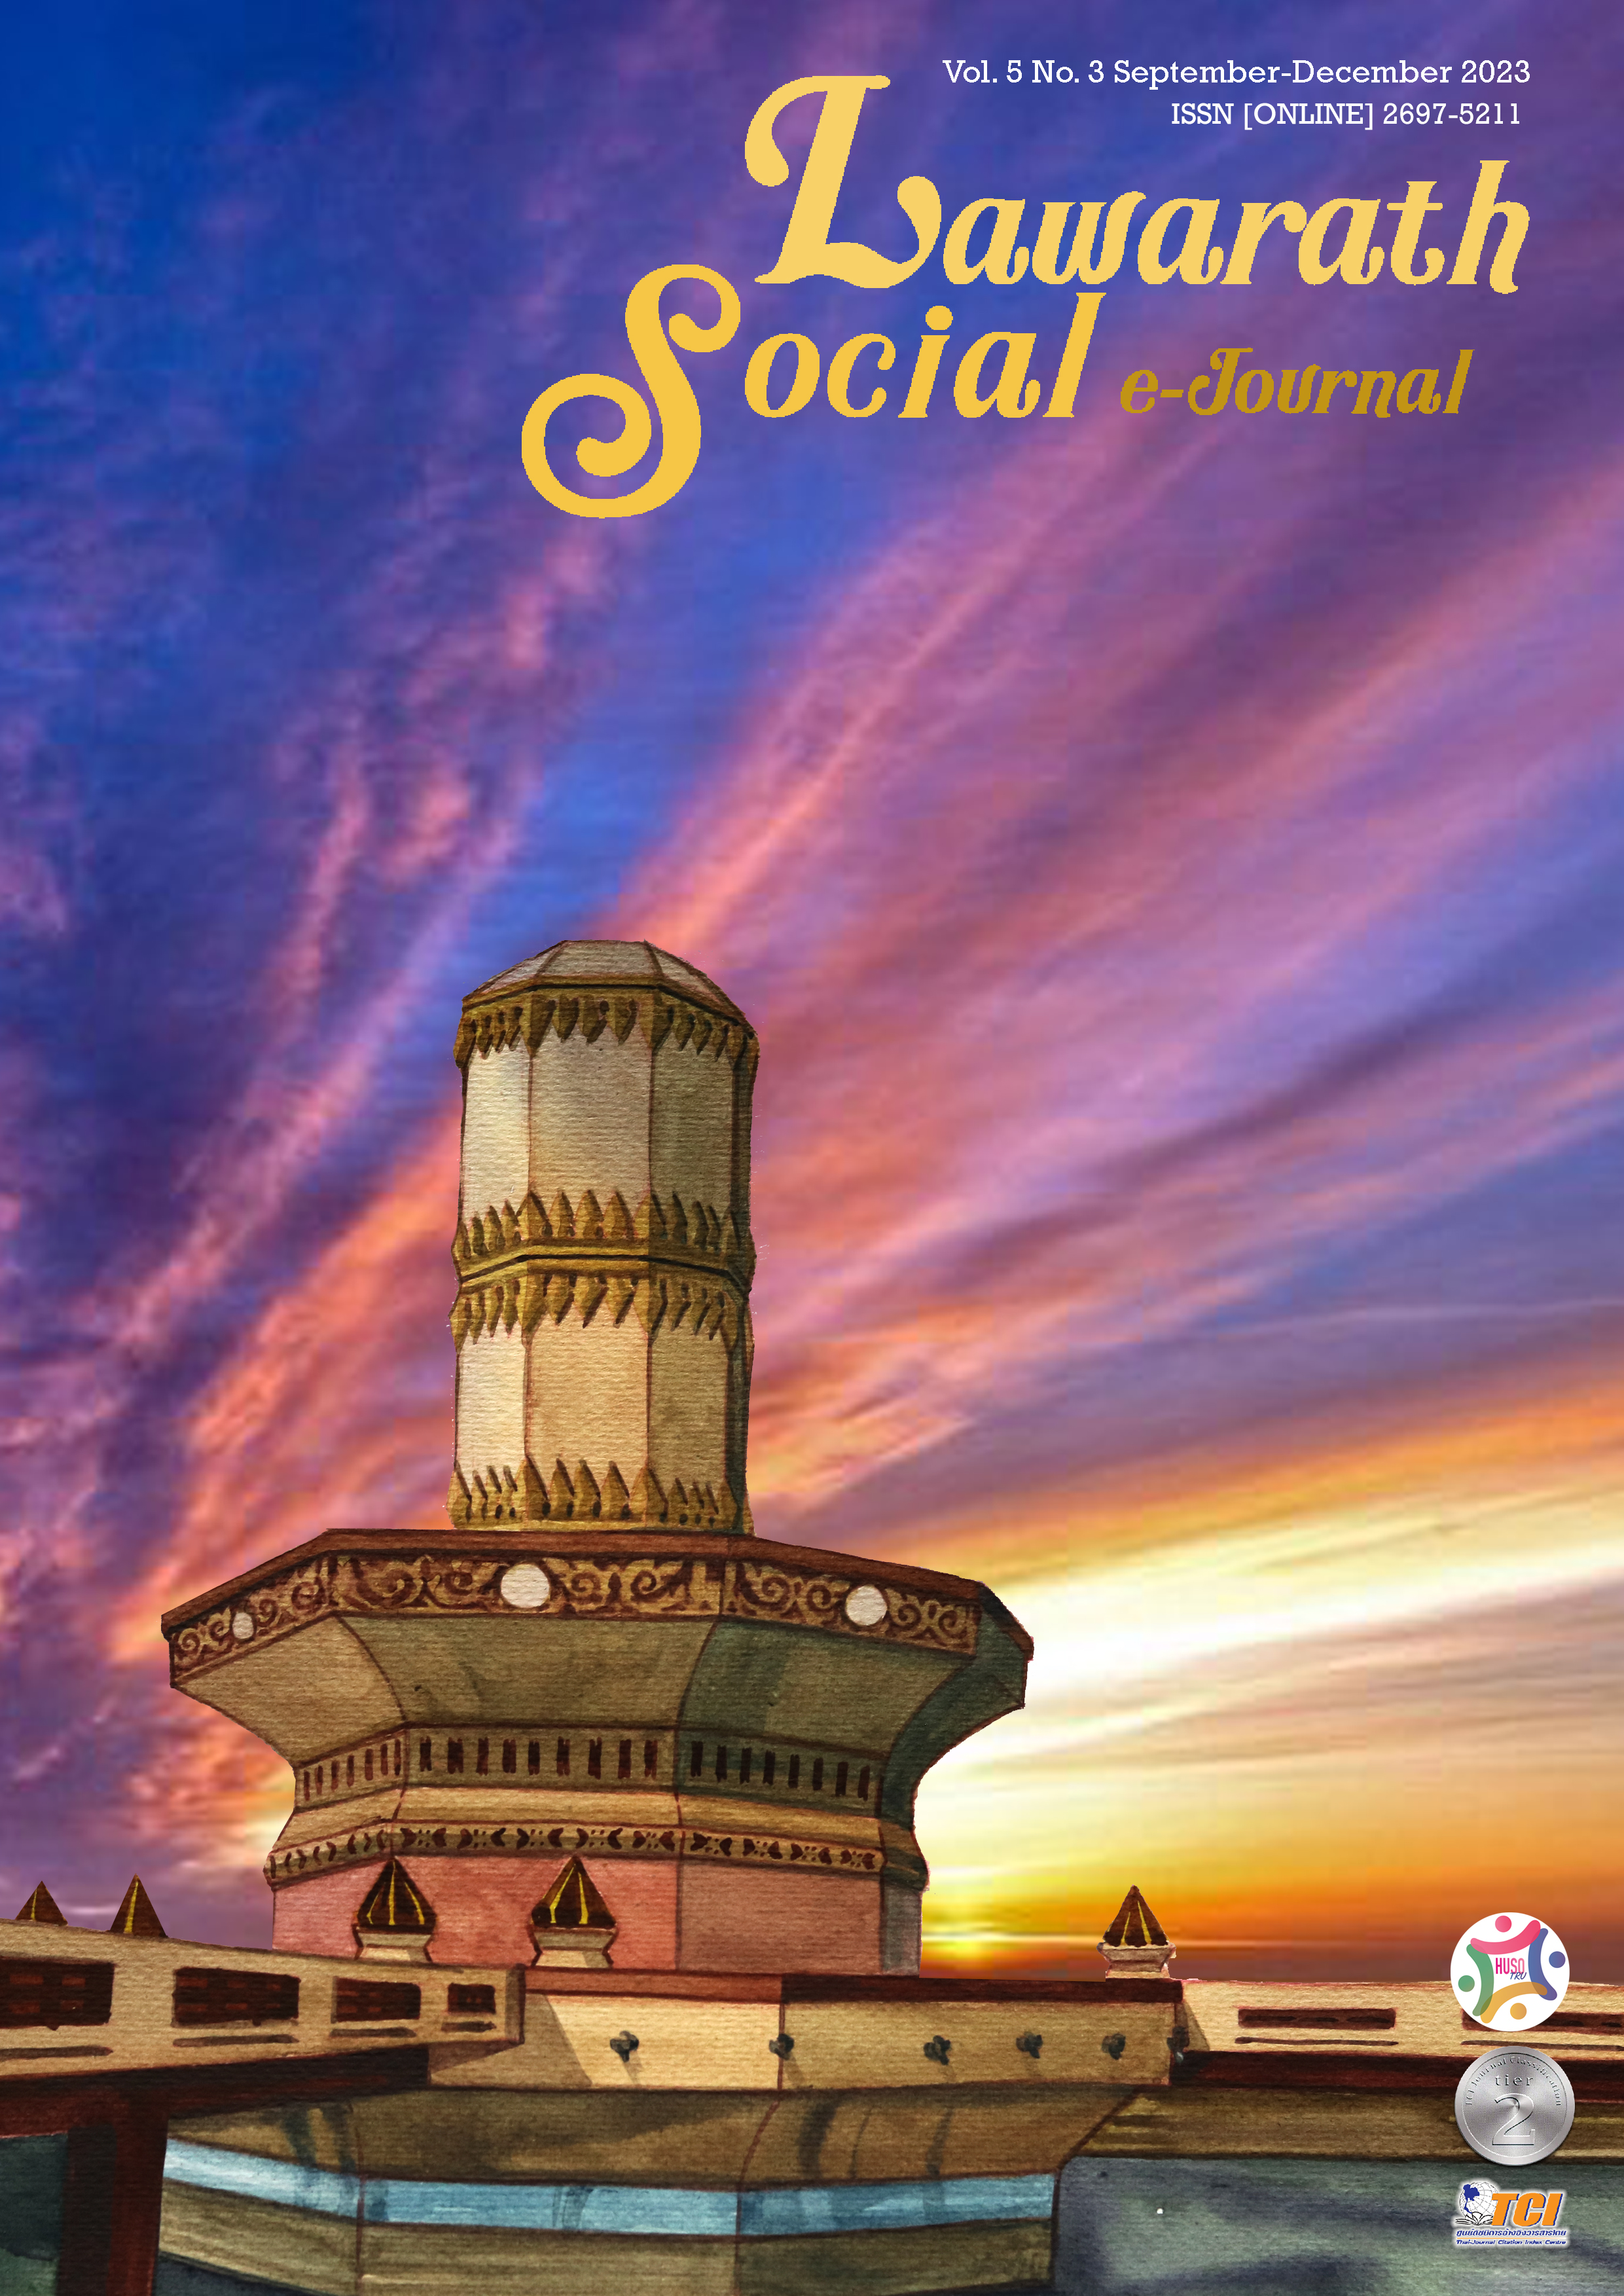 					View Vol. 5 No. 3 (2023): Lawarath Social E-Journal Vol. 5 No. 3 (September - December 2022)
				